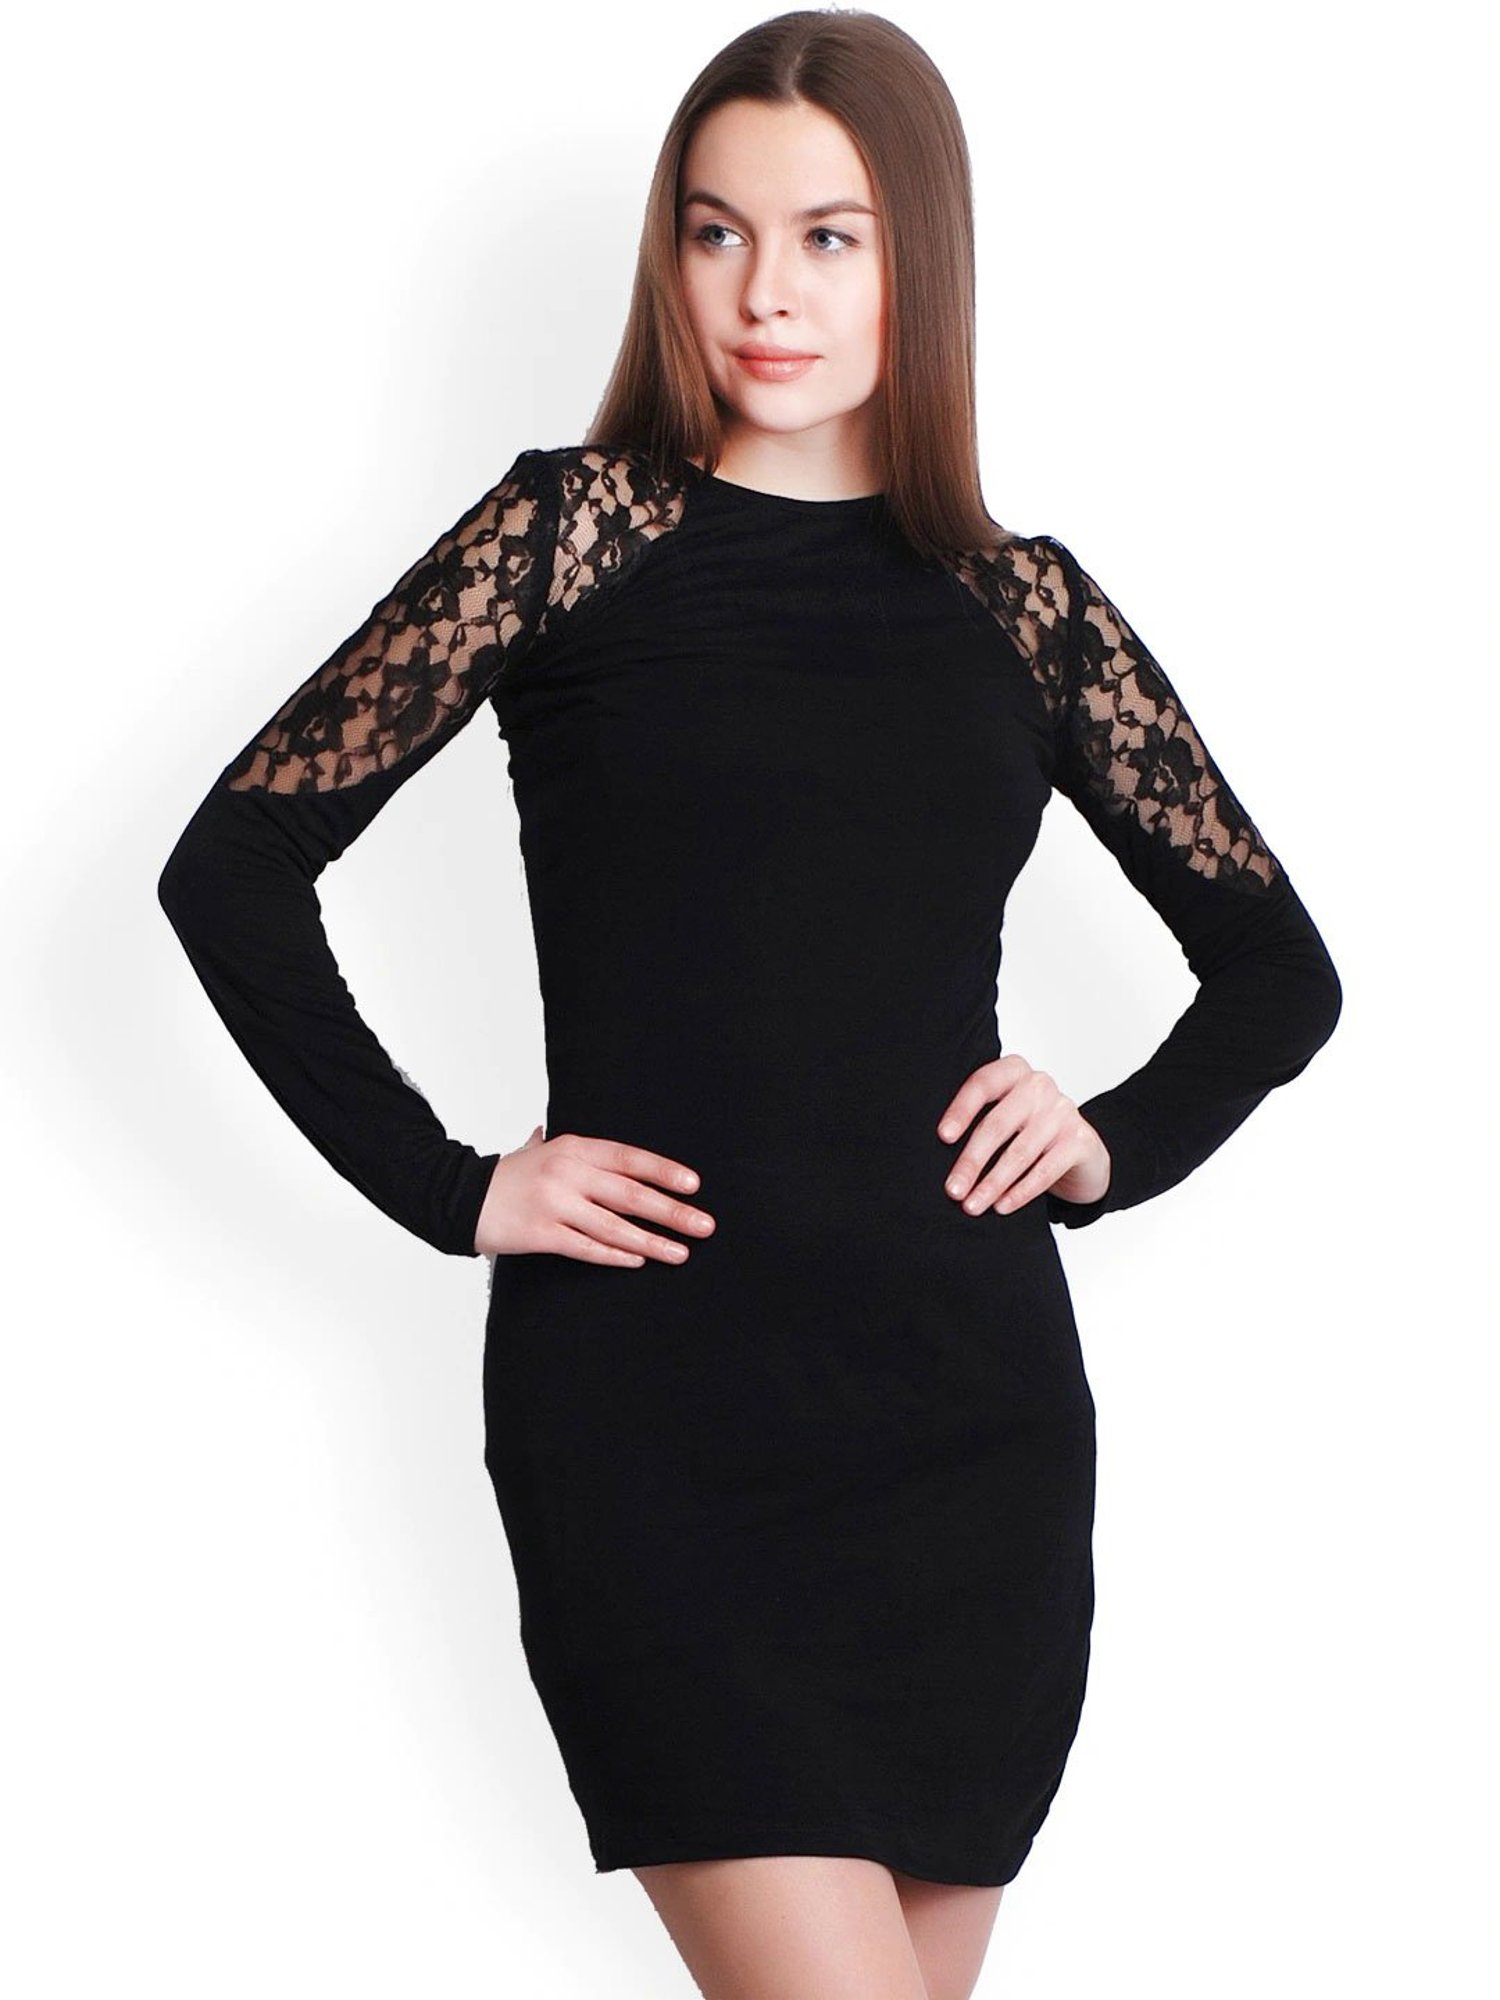 Buy Belle Fille Black Lace Dress for Women Online @ Tata CLiQ